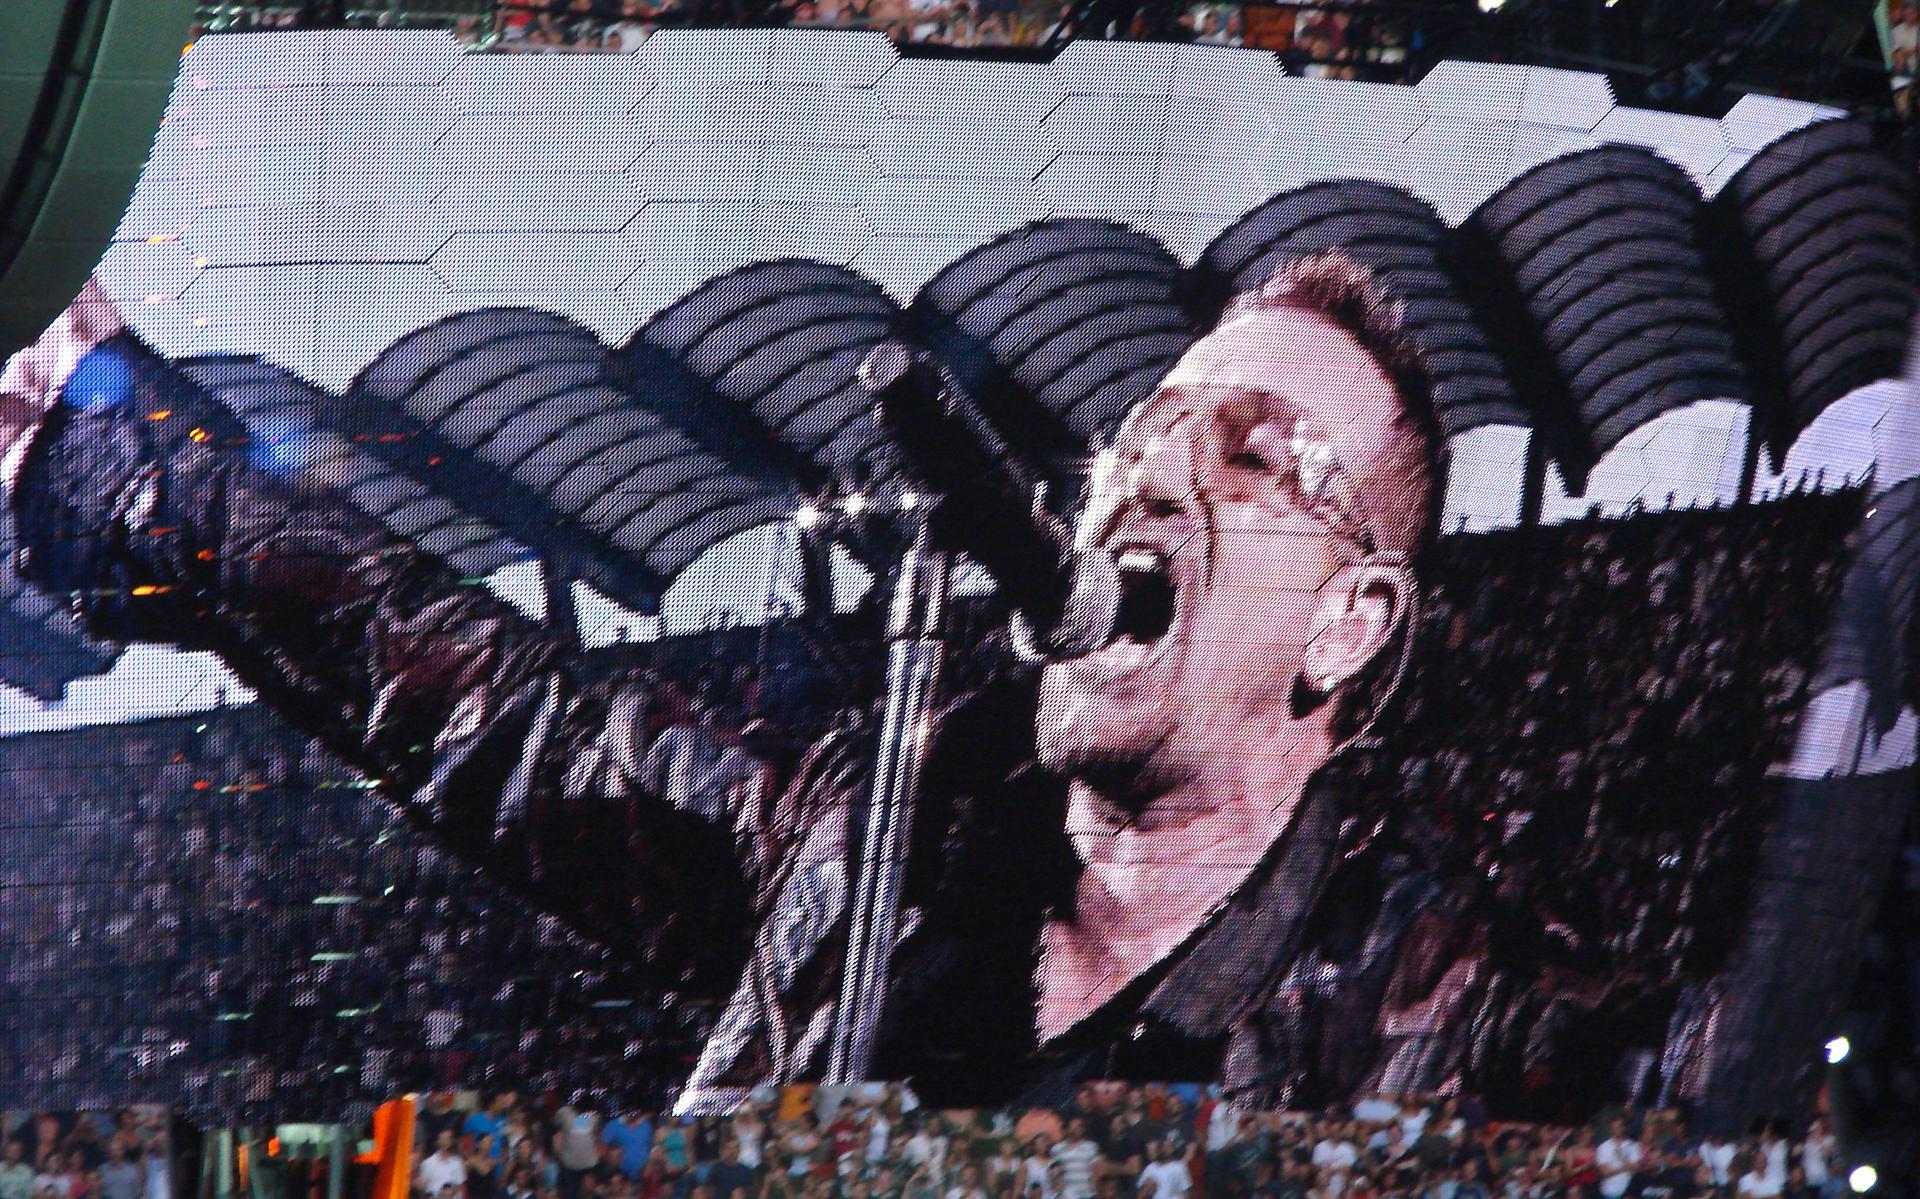 Speelt Bram van den Berg straks ook stadions plat met U2? 